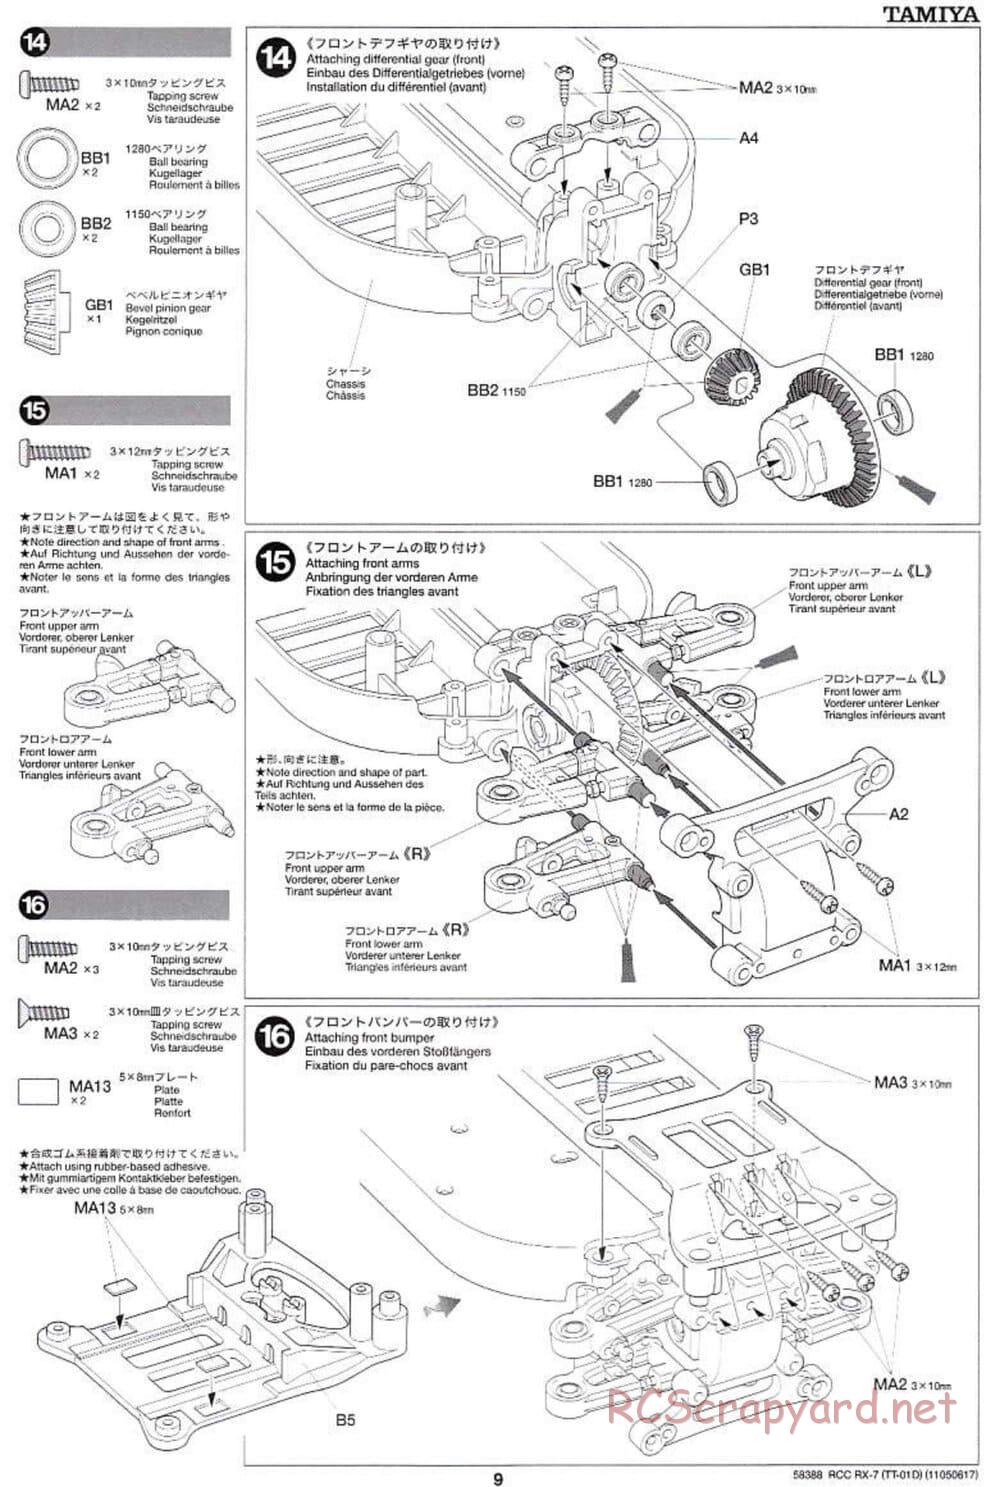 Tamiya - Mazda RX-7 - Drift Spec - TT-01D Chassis - Manual - Page 9